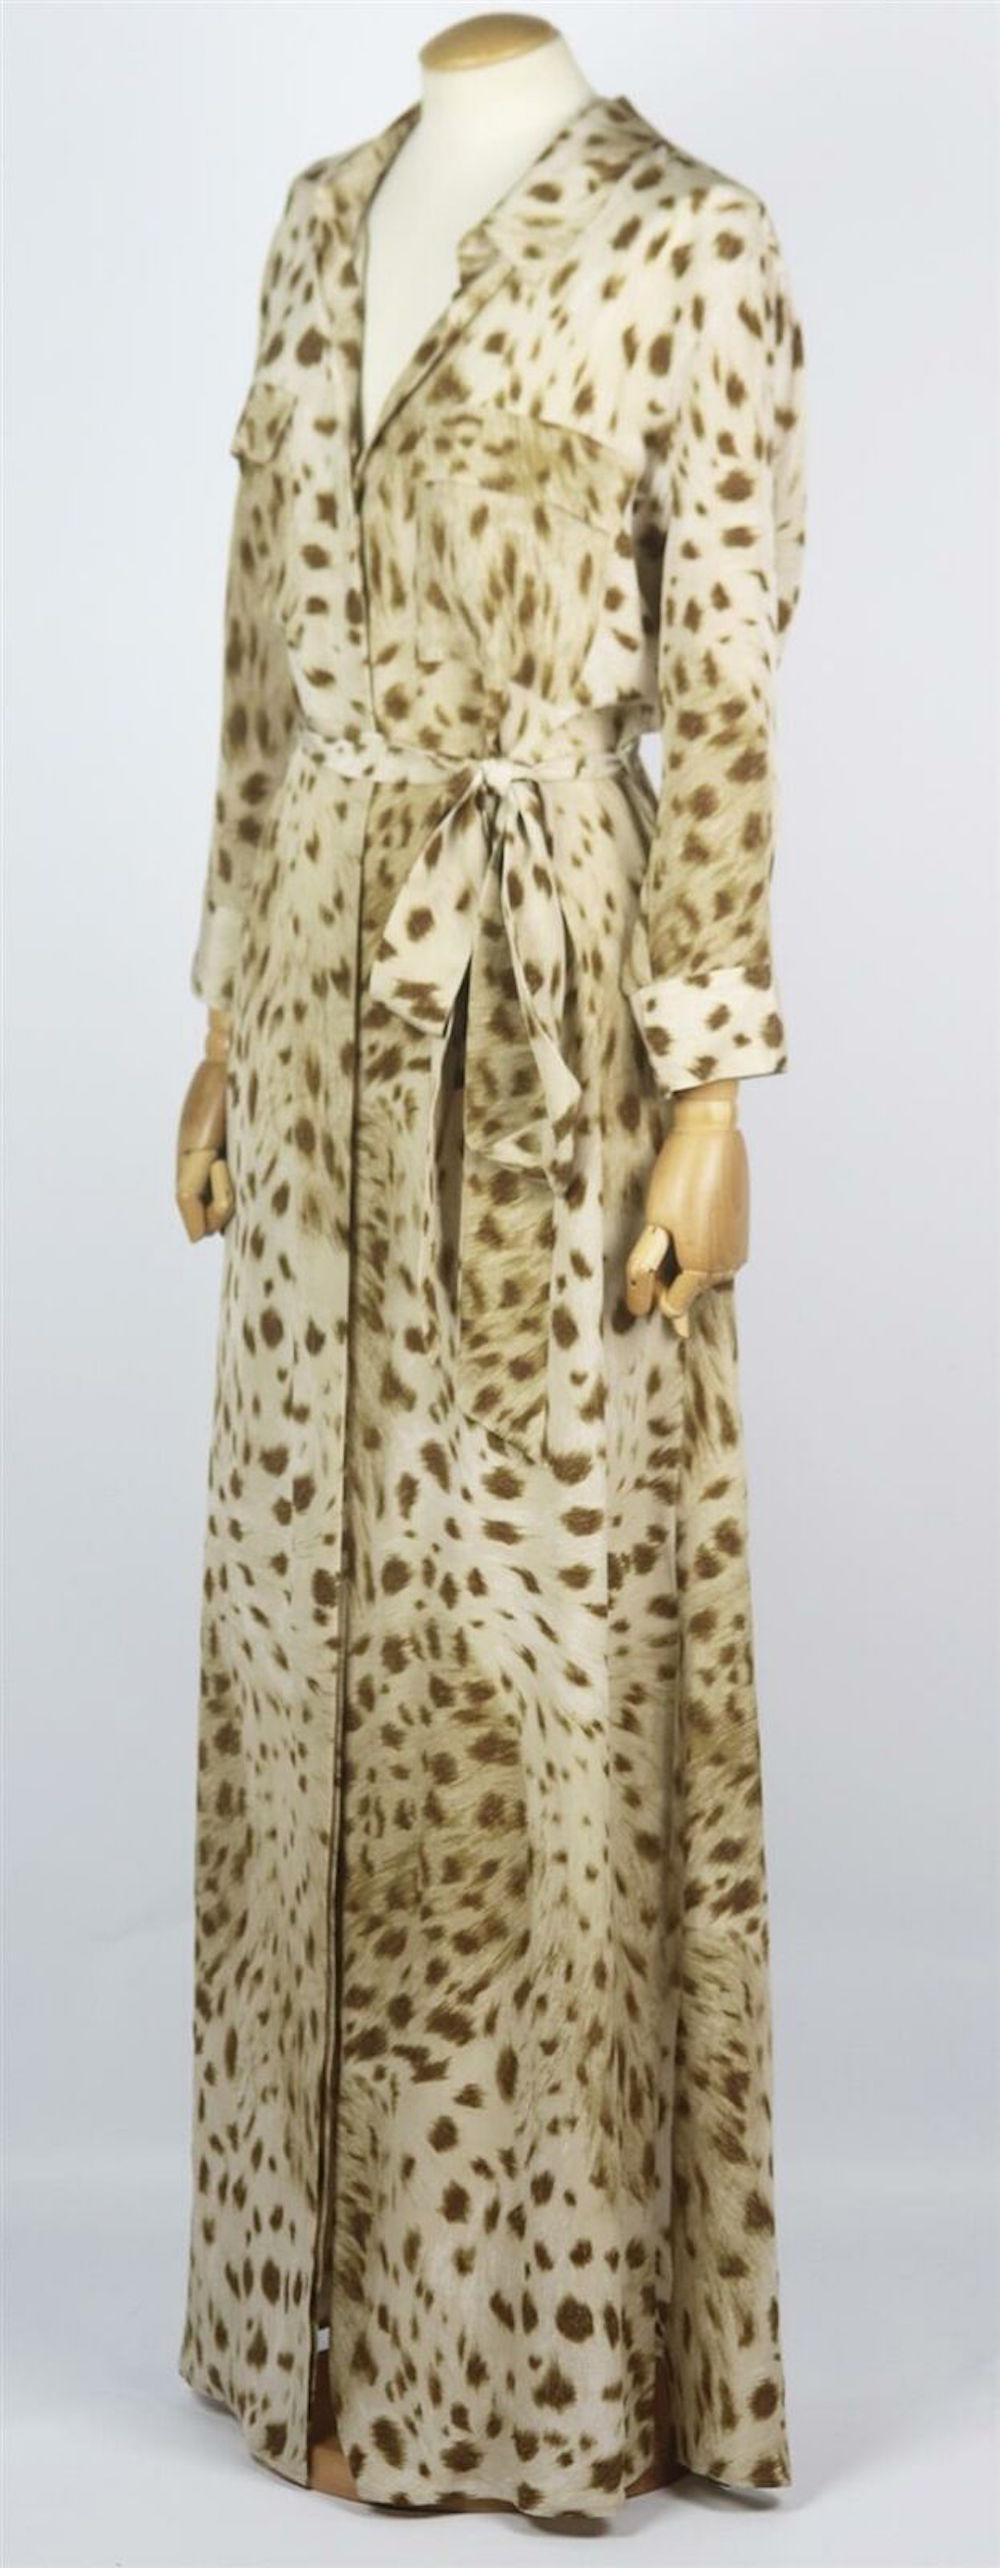 belted cheetah print dress